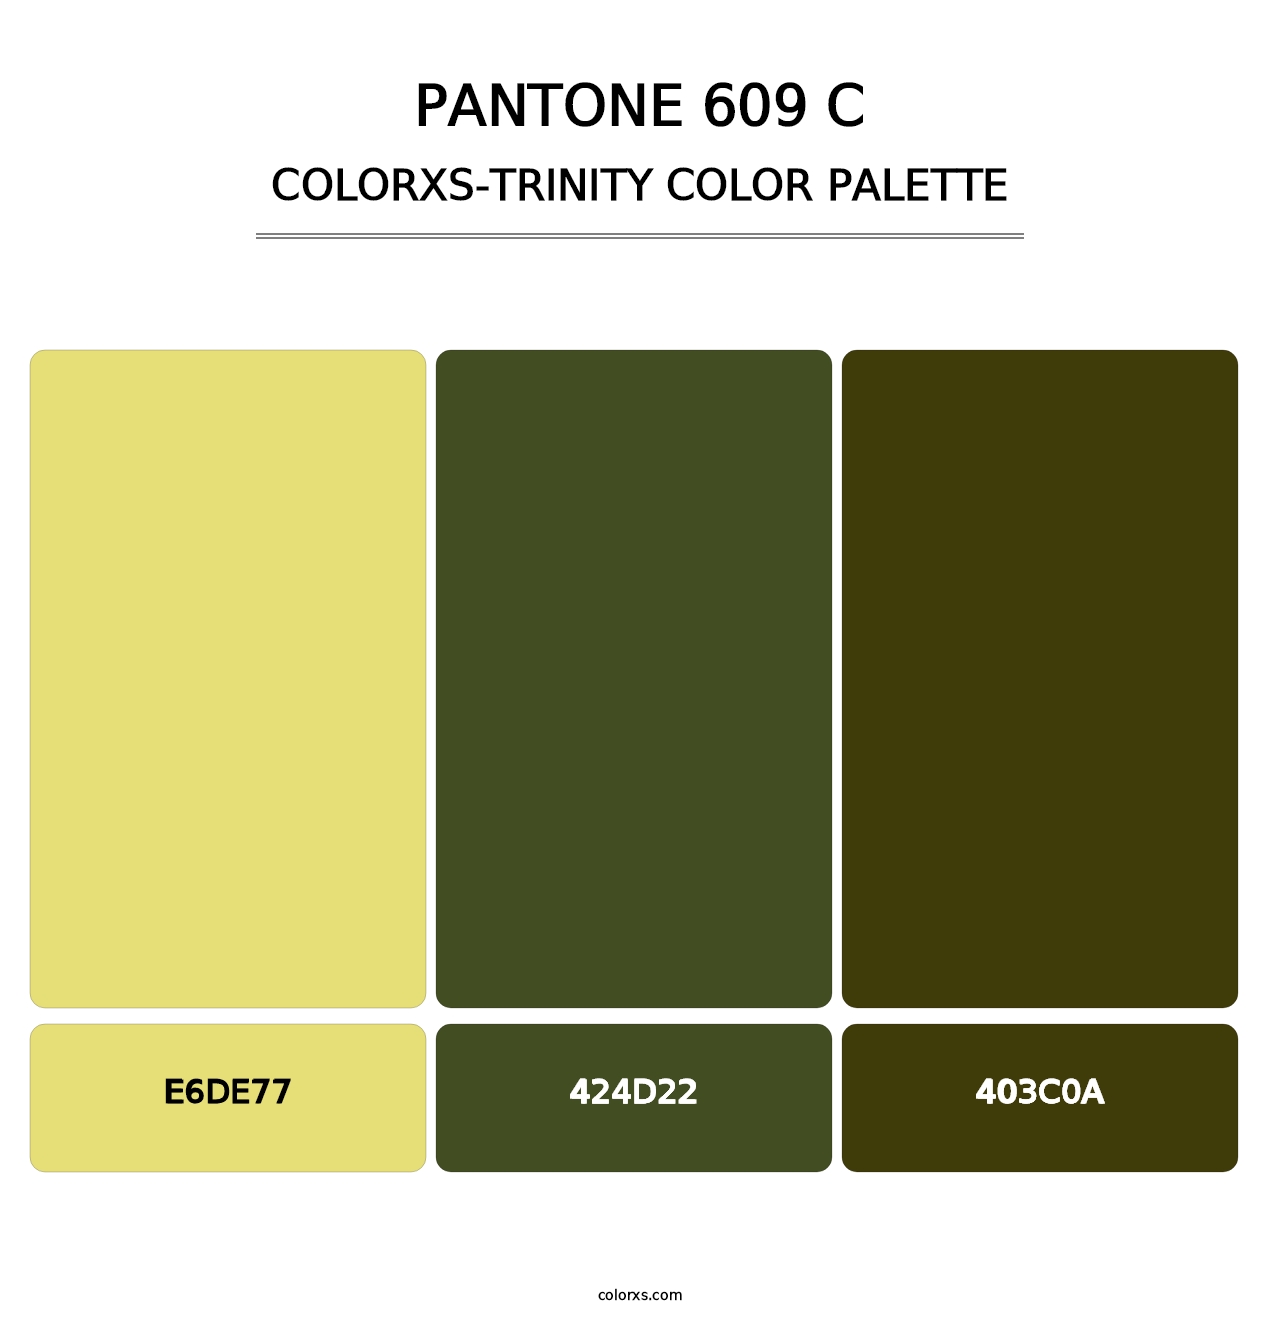 PANTONE 609 C - Colorxs Trinity Palette